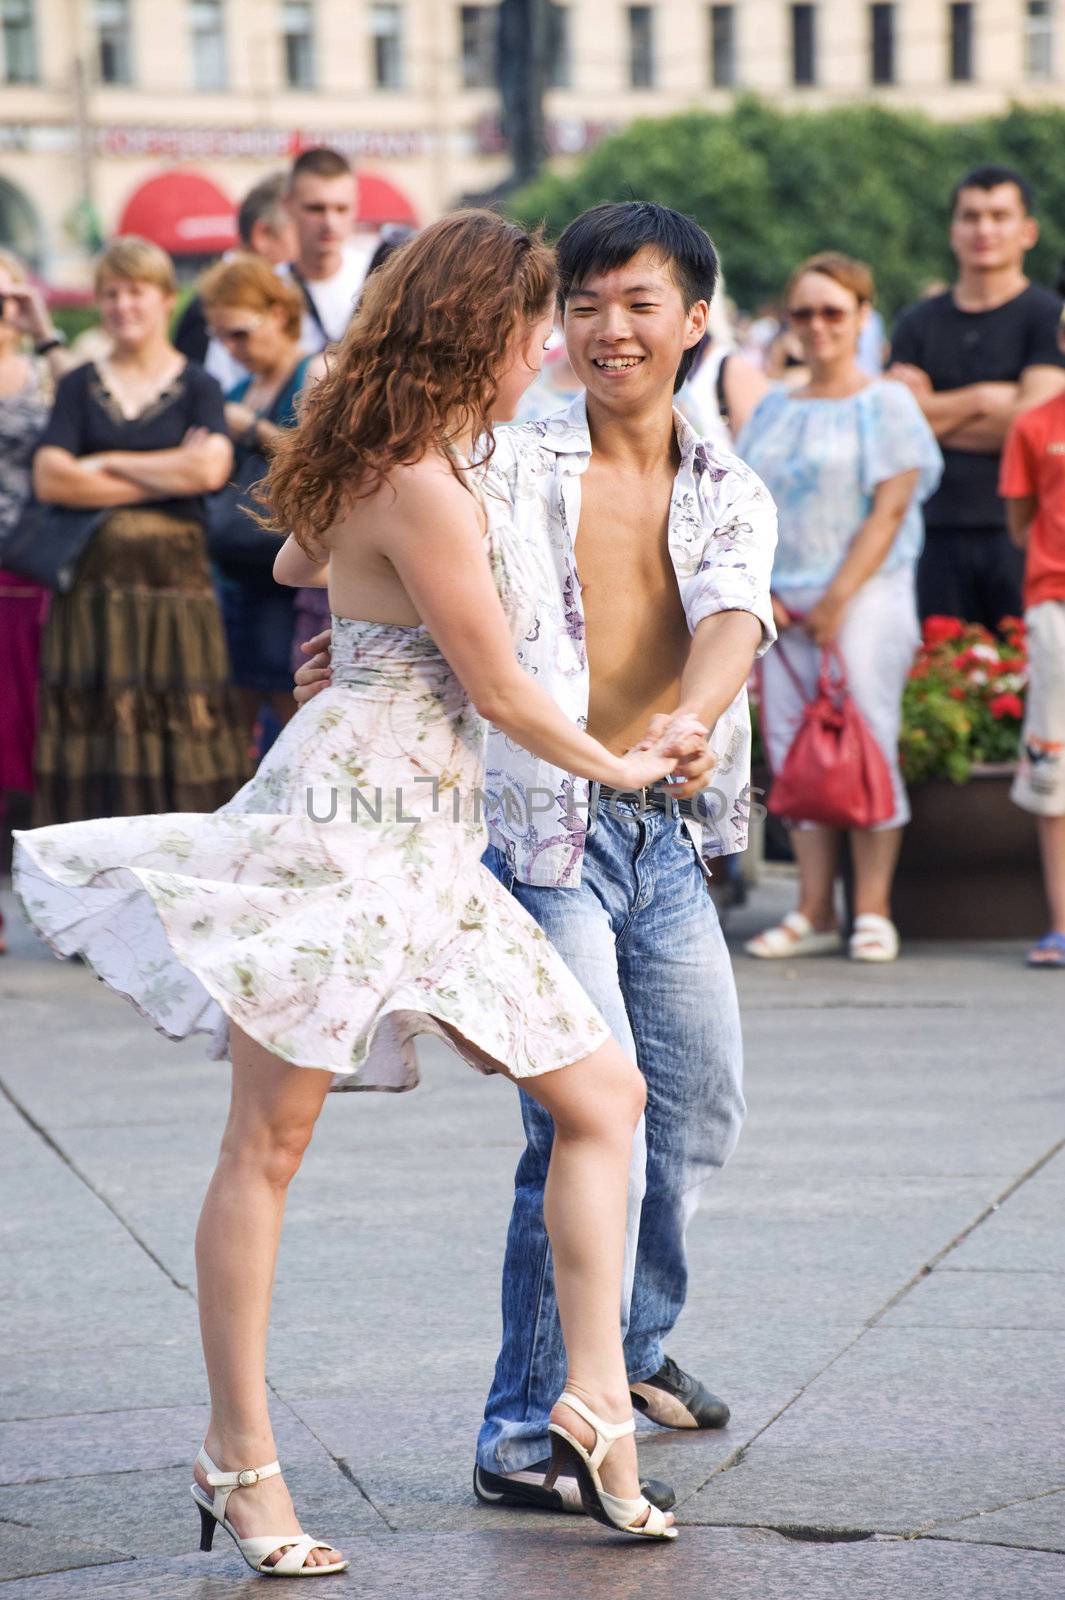 Dances in the street of St Petersburg, Russia